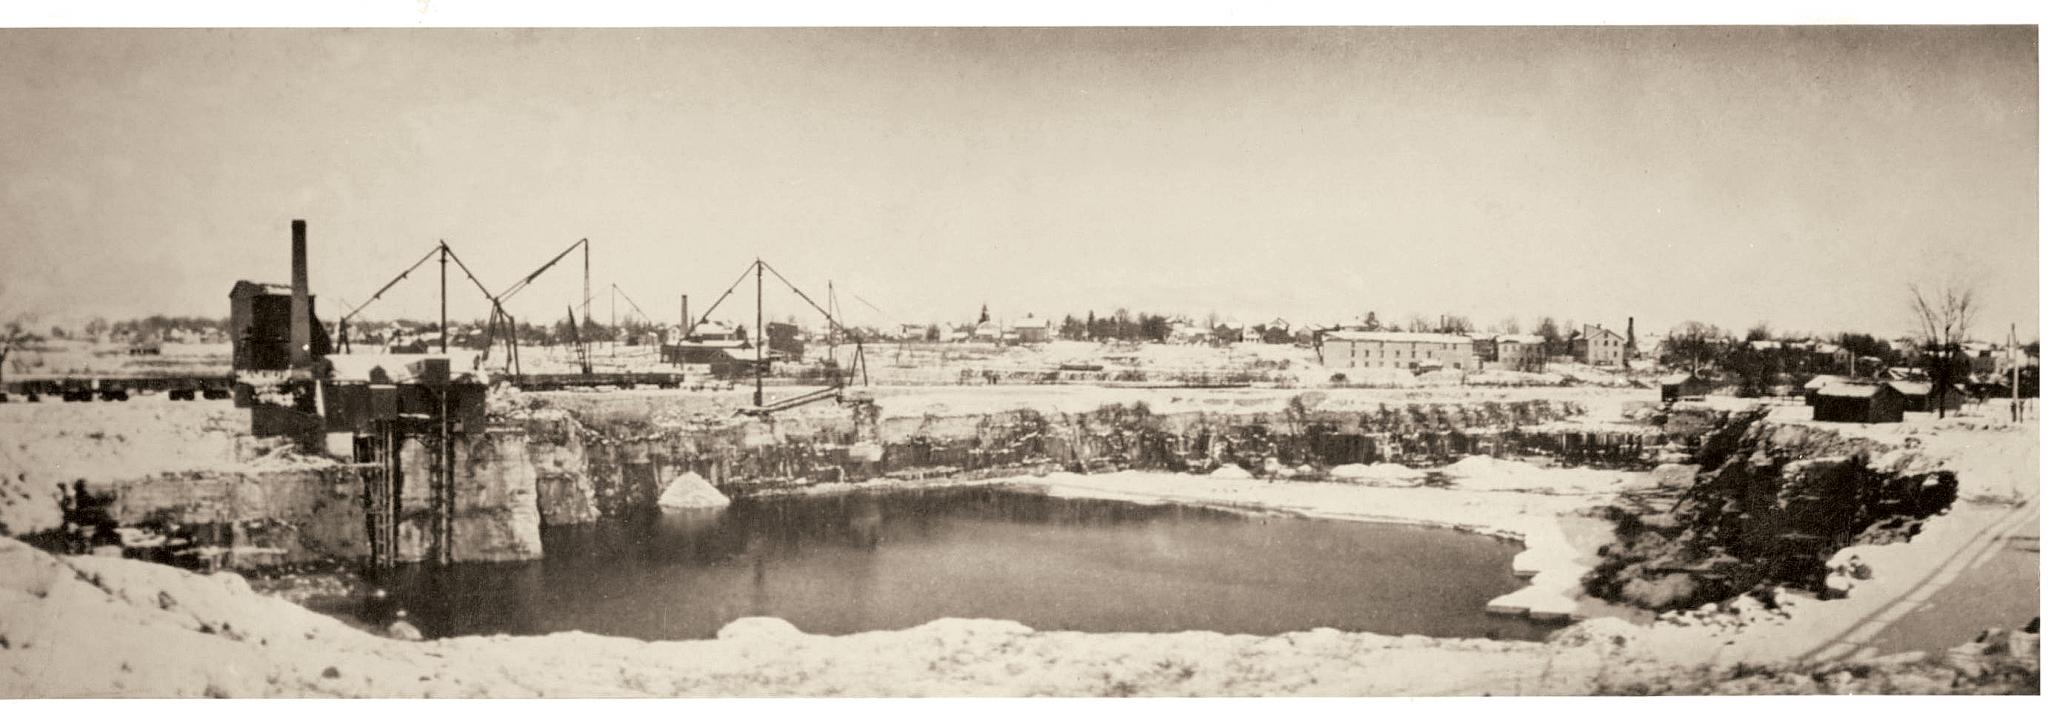 Martin quarry closed for winter season, circa 1900

